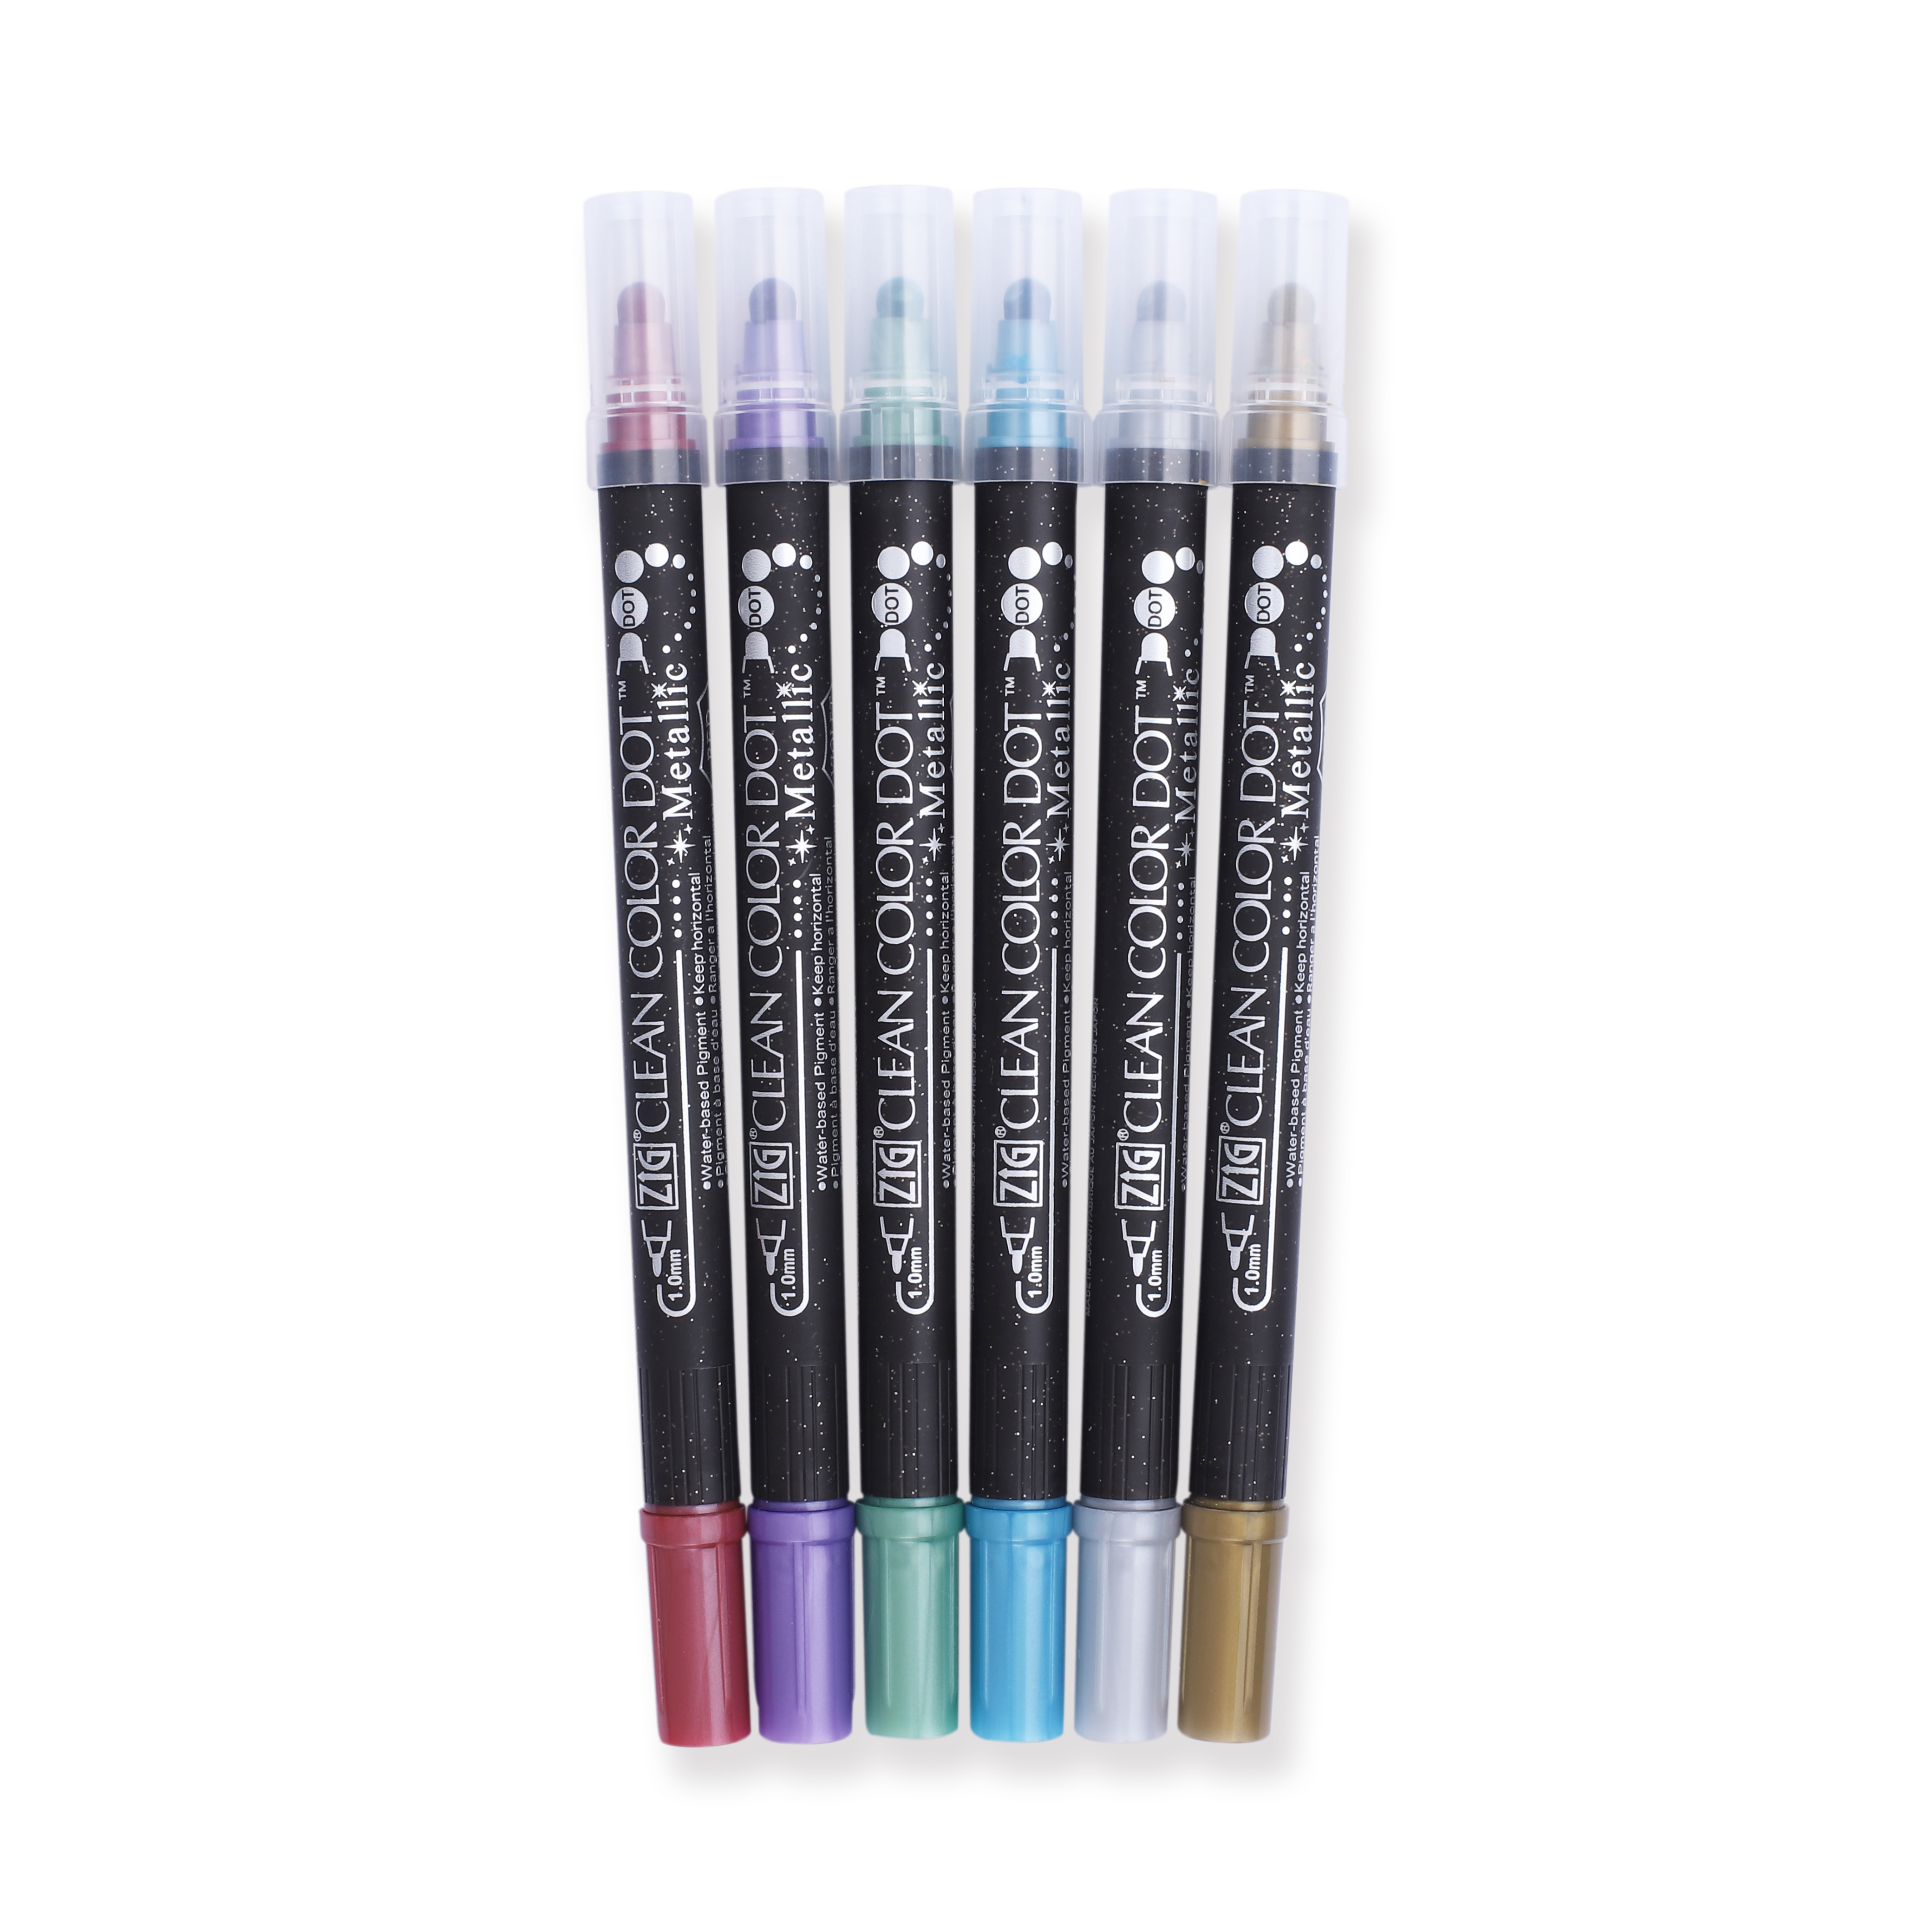 Zig Clean Color DOT Single-Ended Marker Set of 6, Mild Smoky Colors